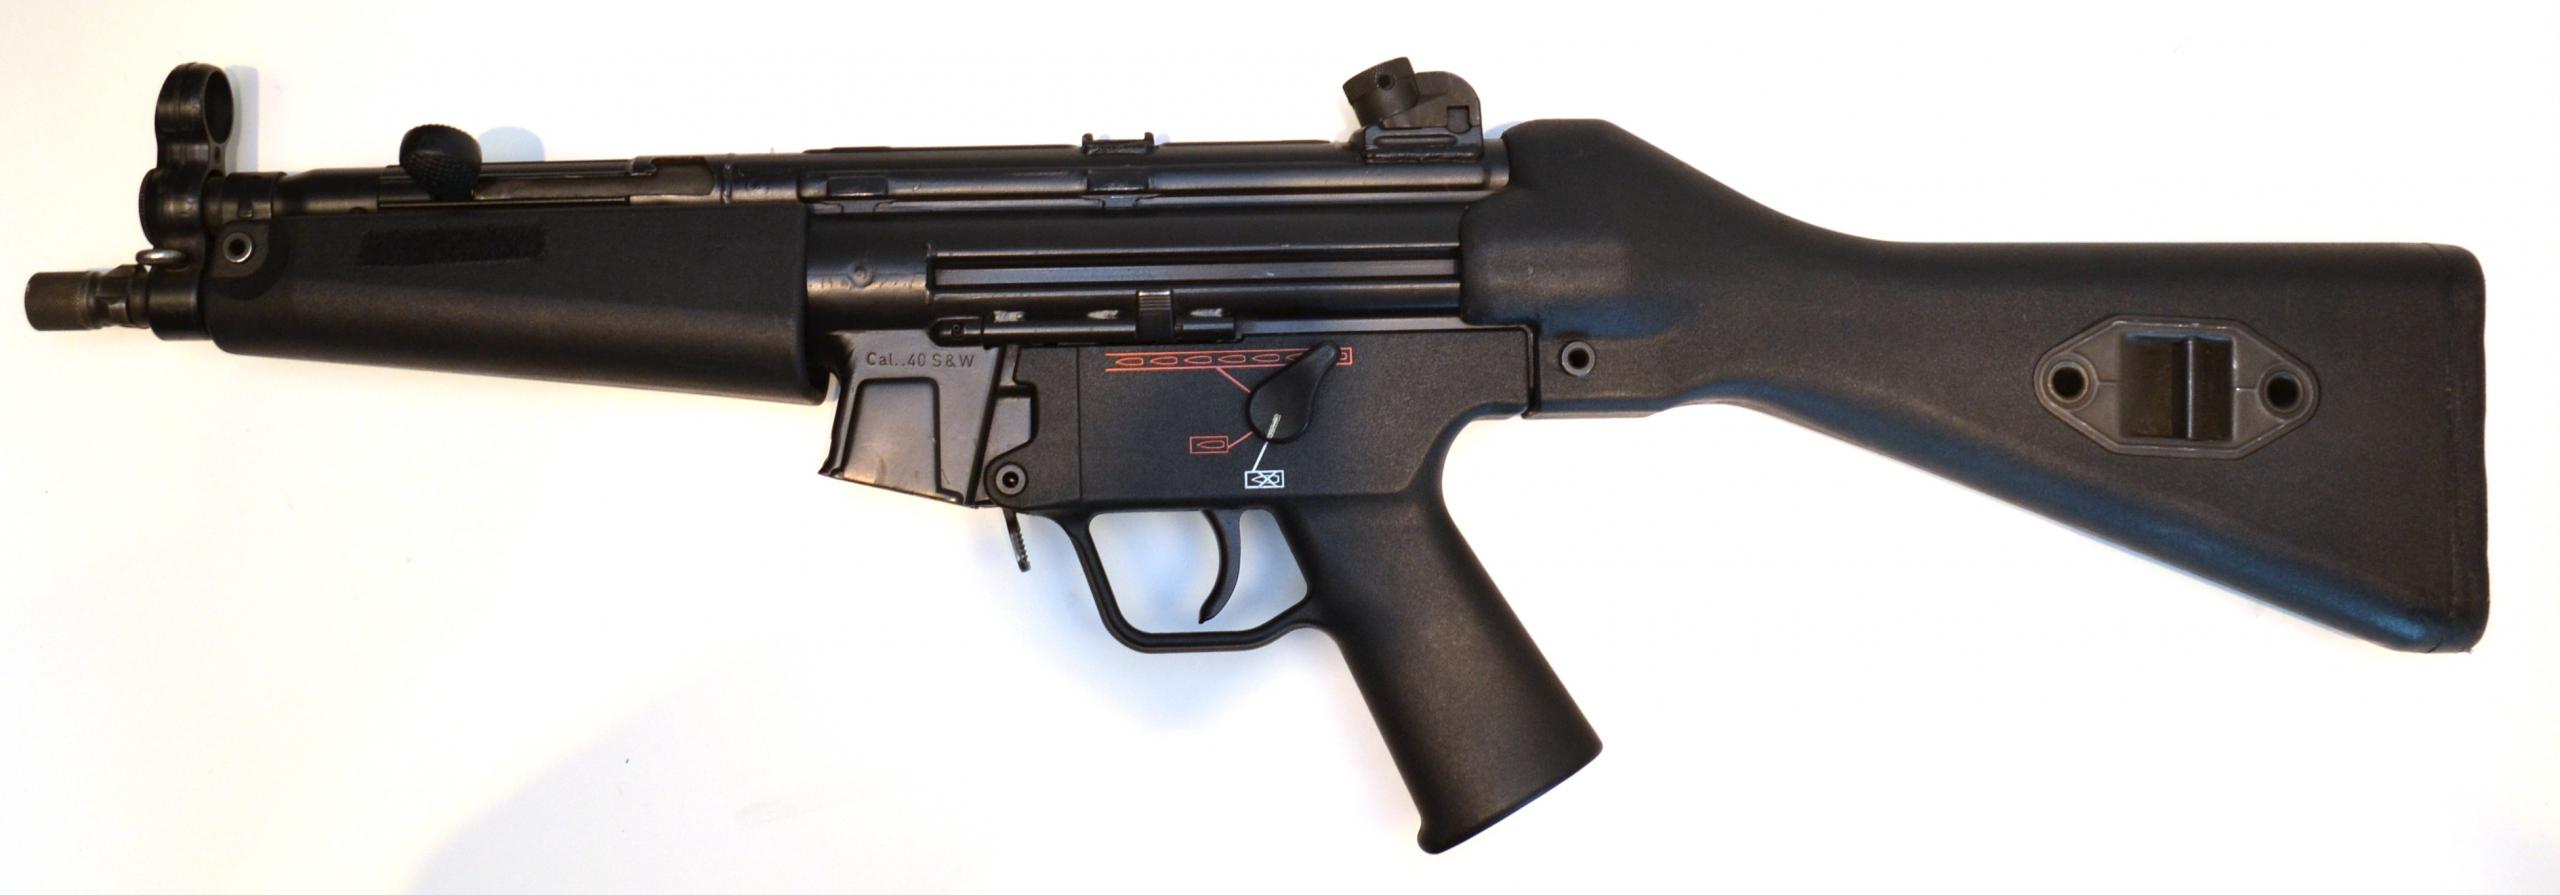 WTS: HK MP5 .40 S&W FIXED STOCK $3,500 - NFA Market Board - Sturmgewehr...